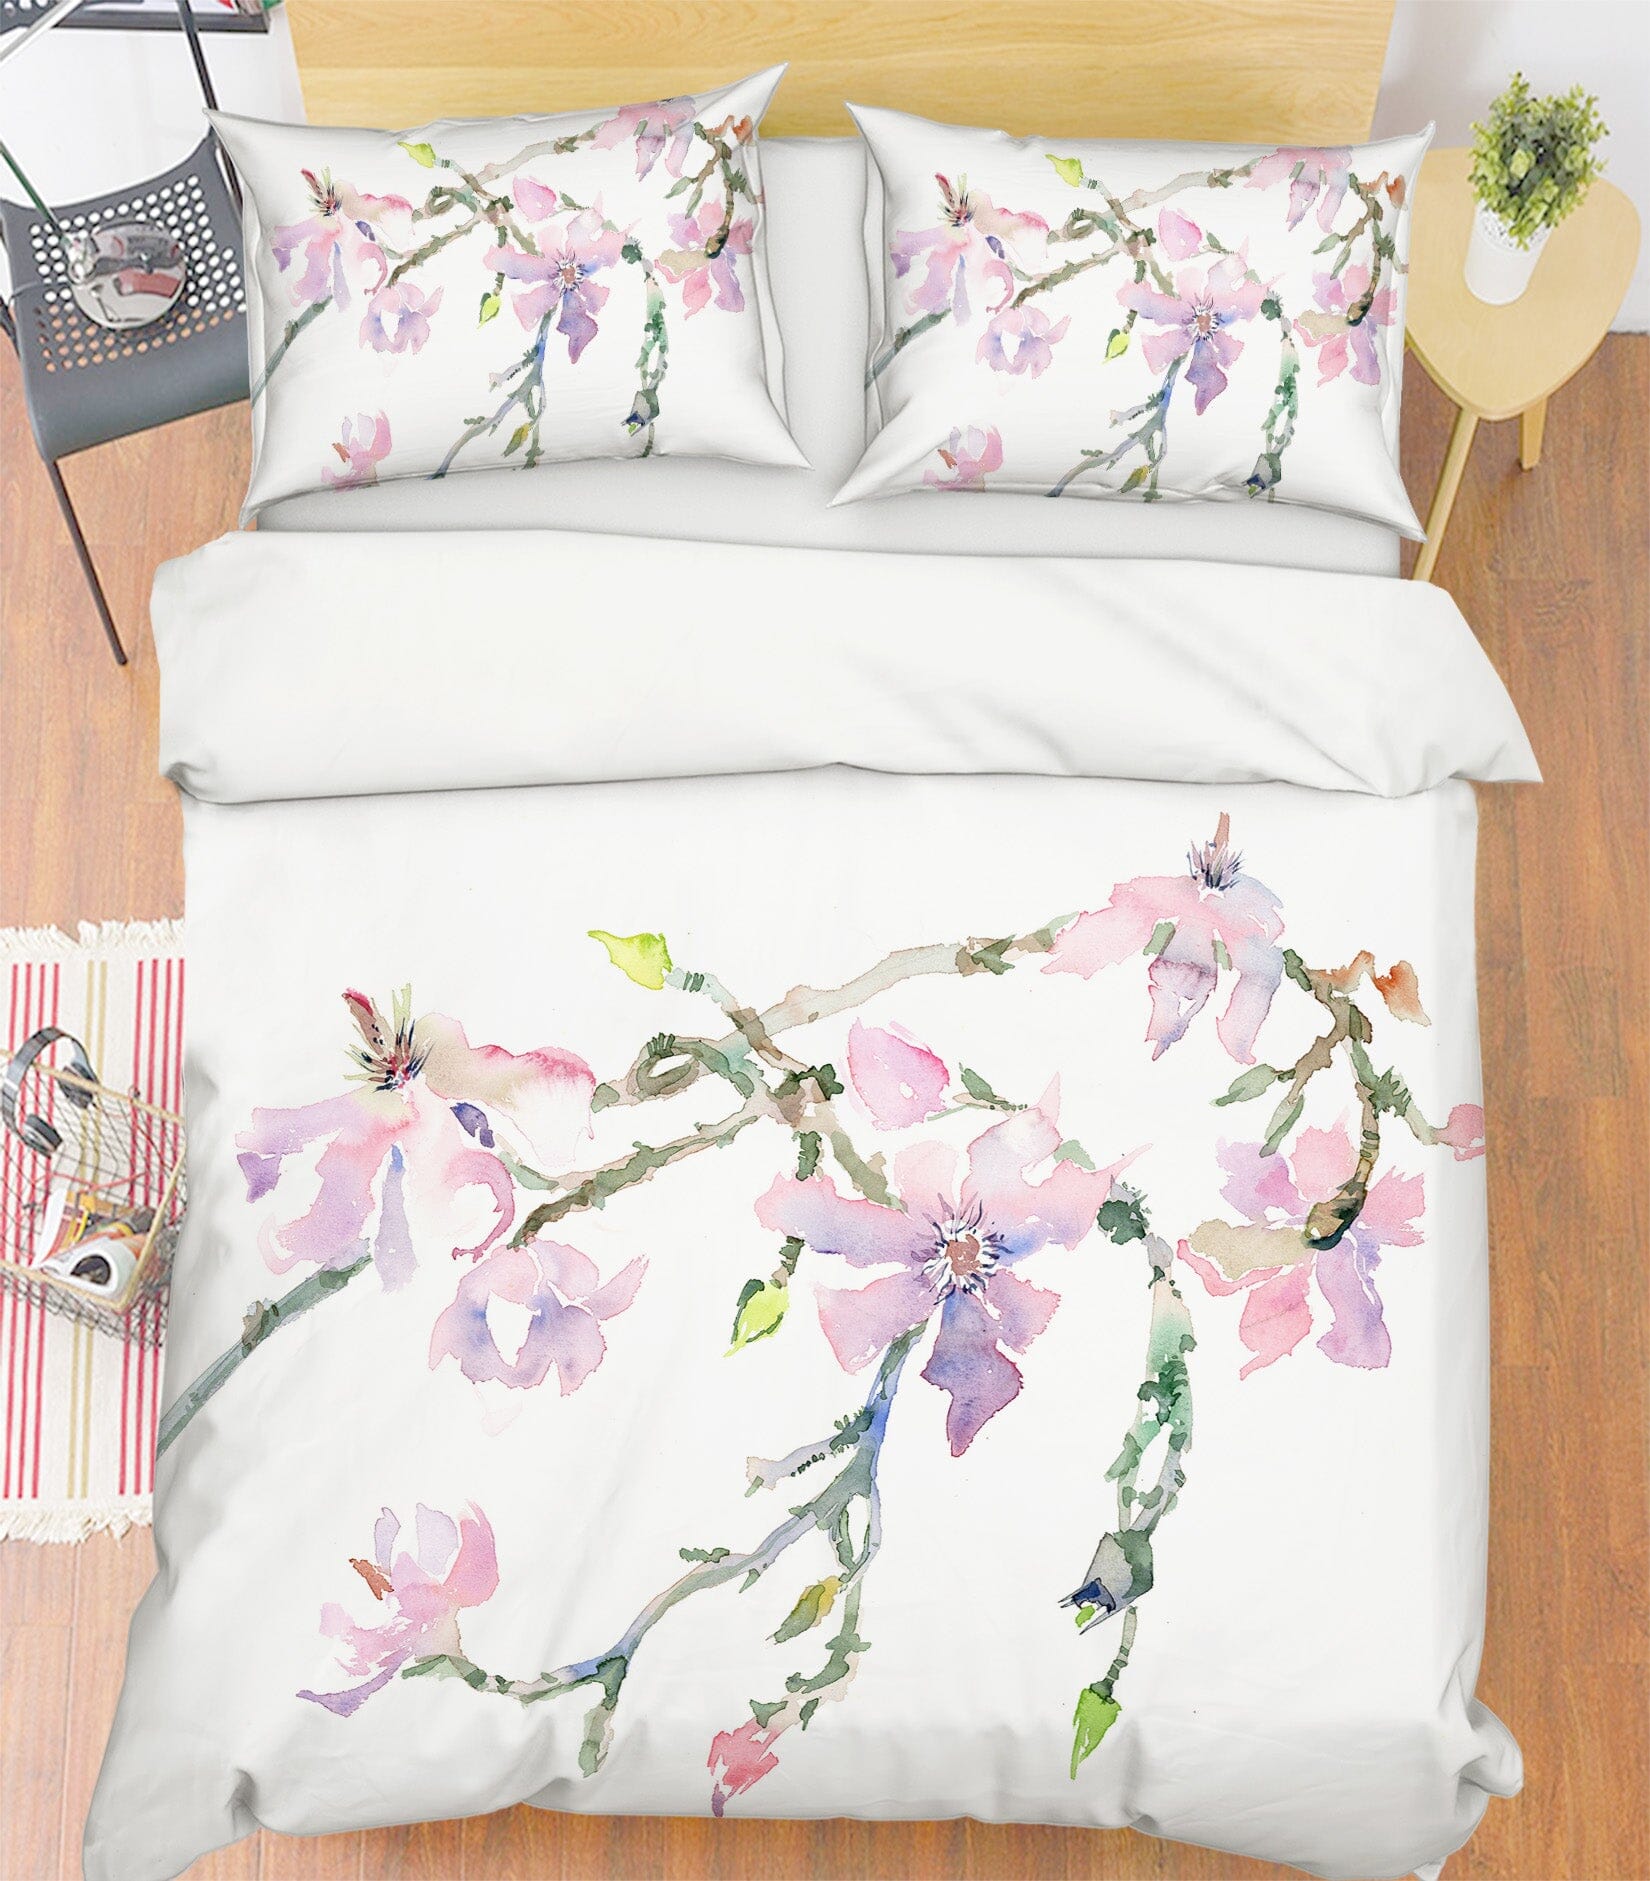 3D Peach Blossom 2006 Anne Farrall Doyle Bedding Bed Pillowcases Quilt Quiet Covers AJ Creativity Home 